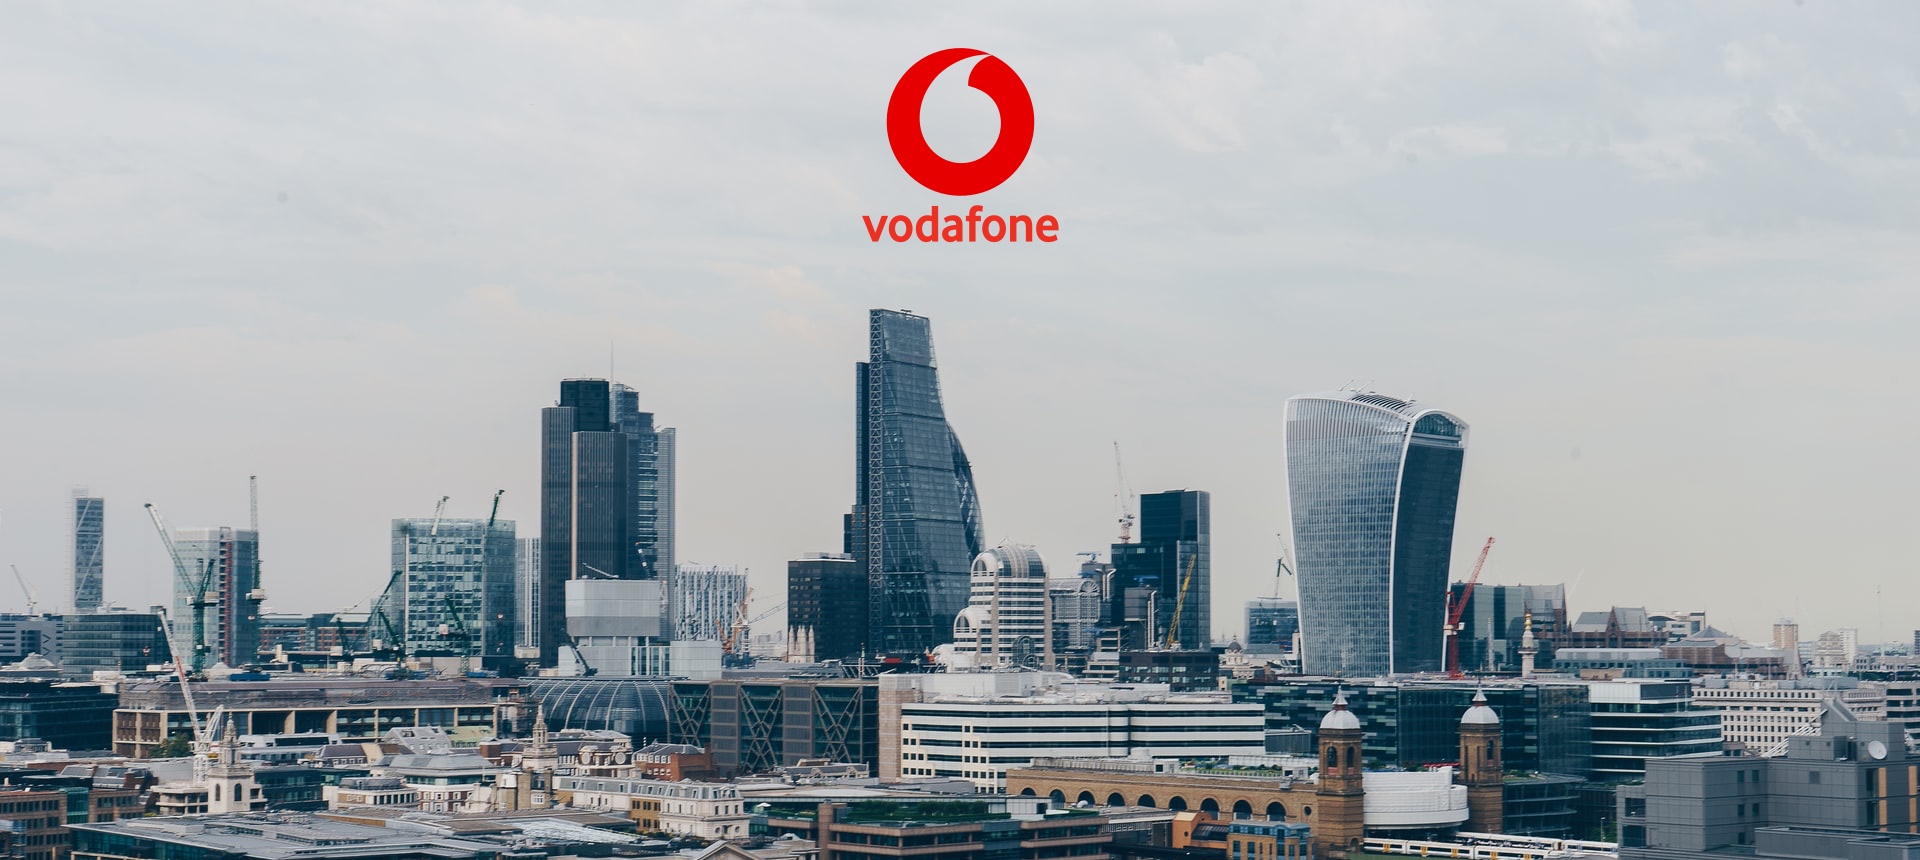 Vodafone Sure Signal Stops Its Operating